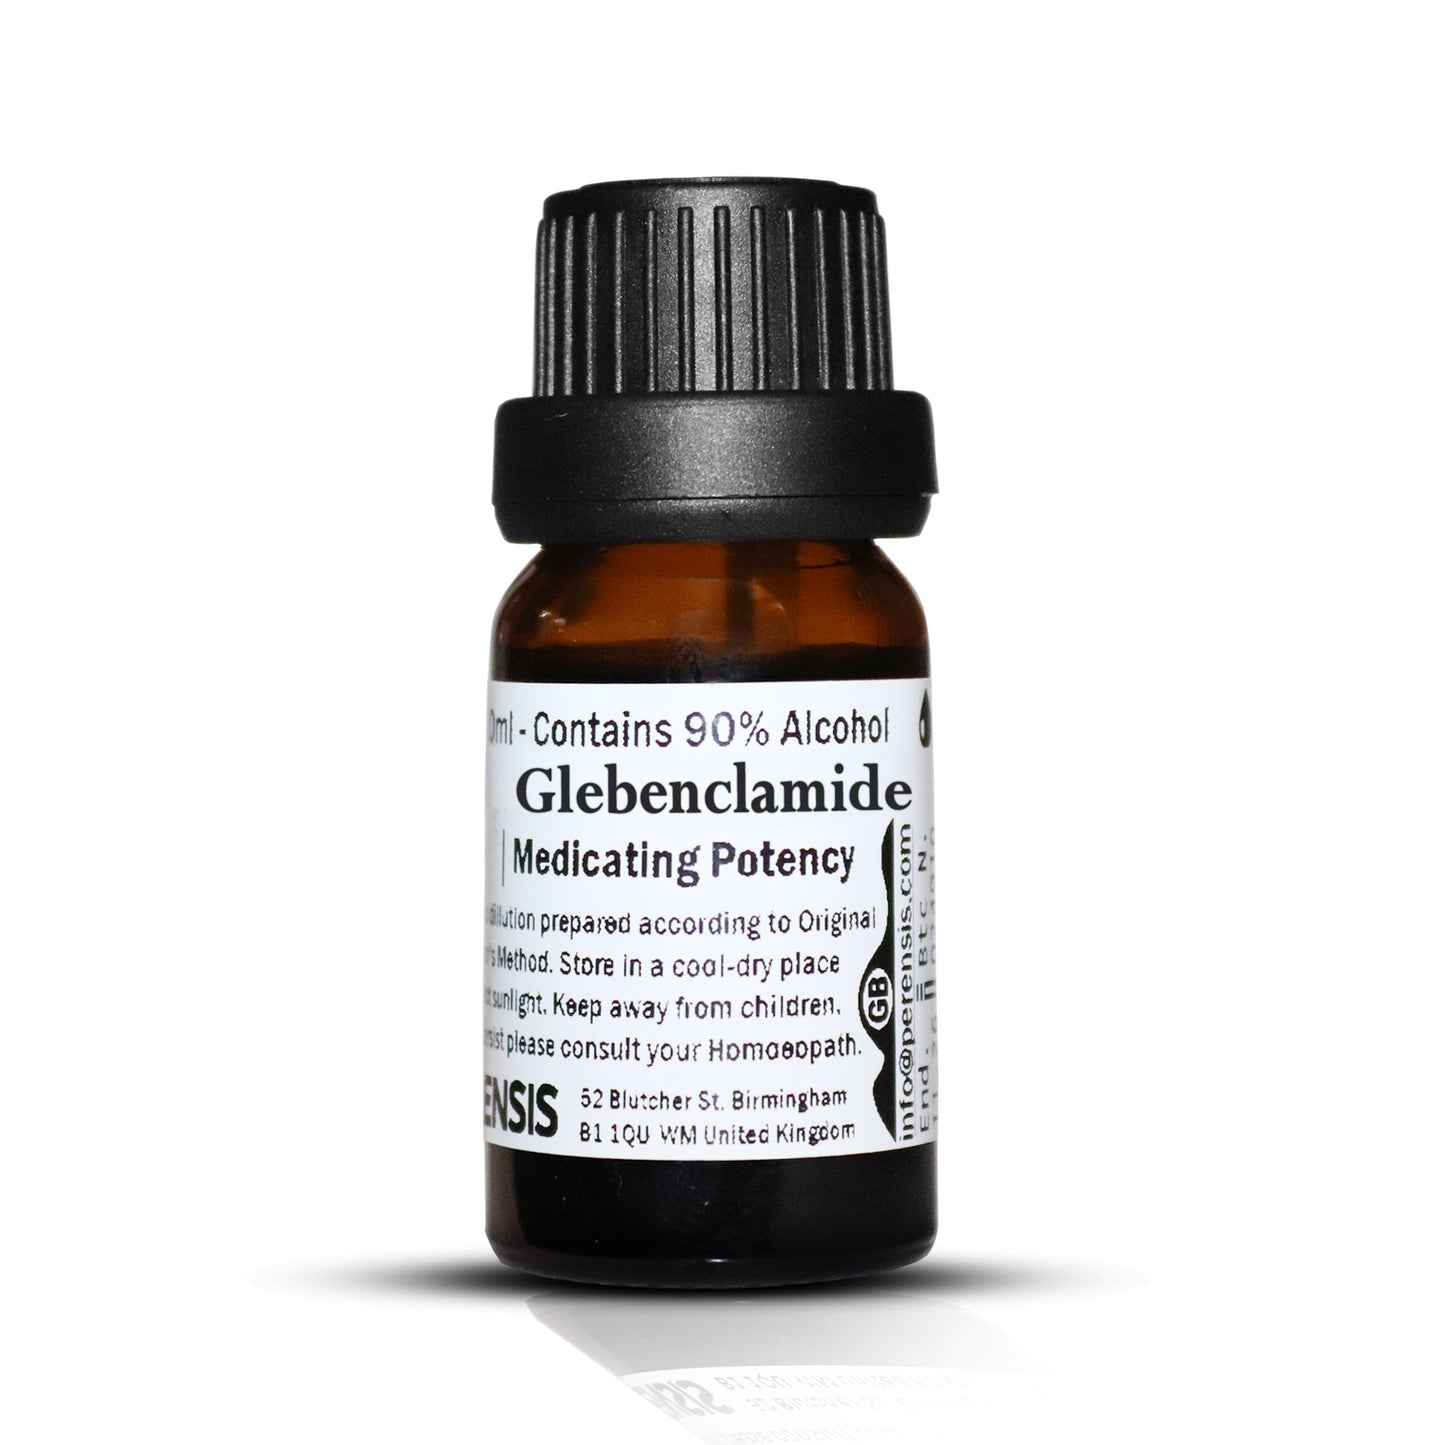 Glebenclamide